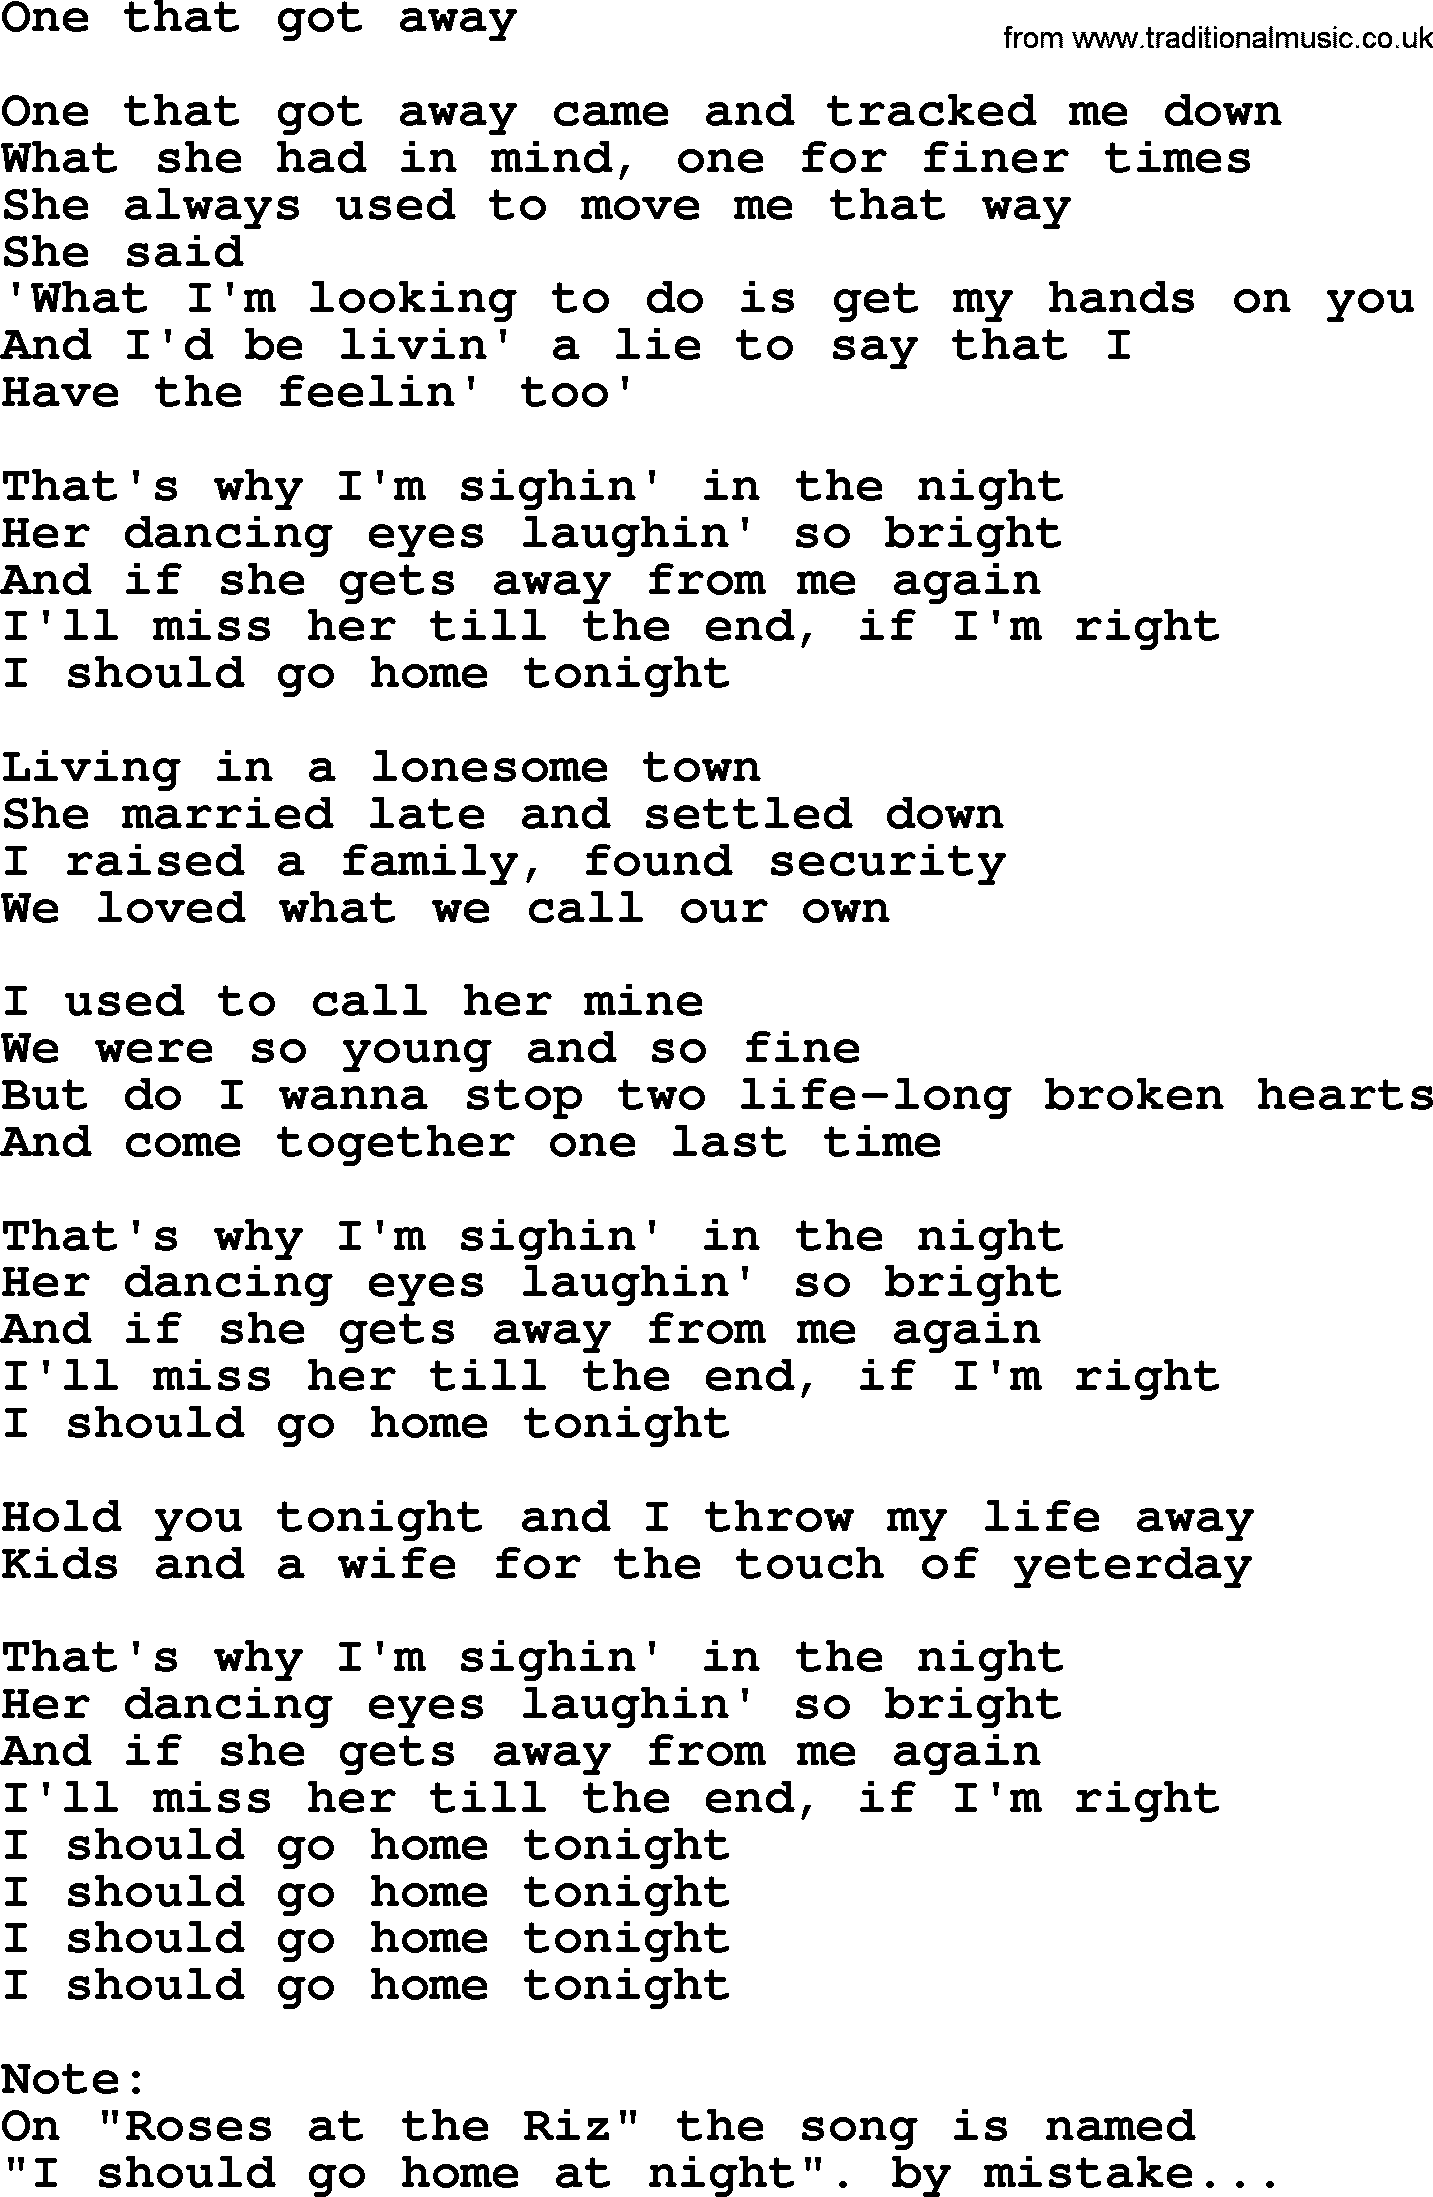 The Byrds song One That Got Away, lyrics